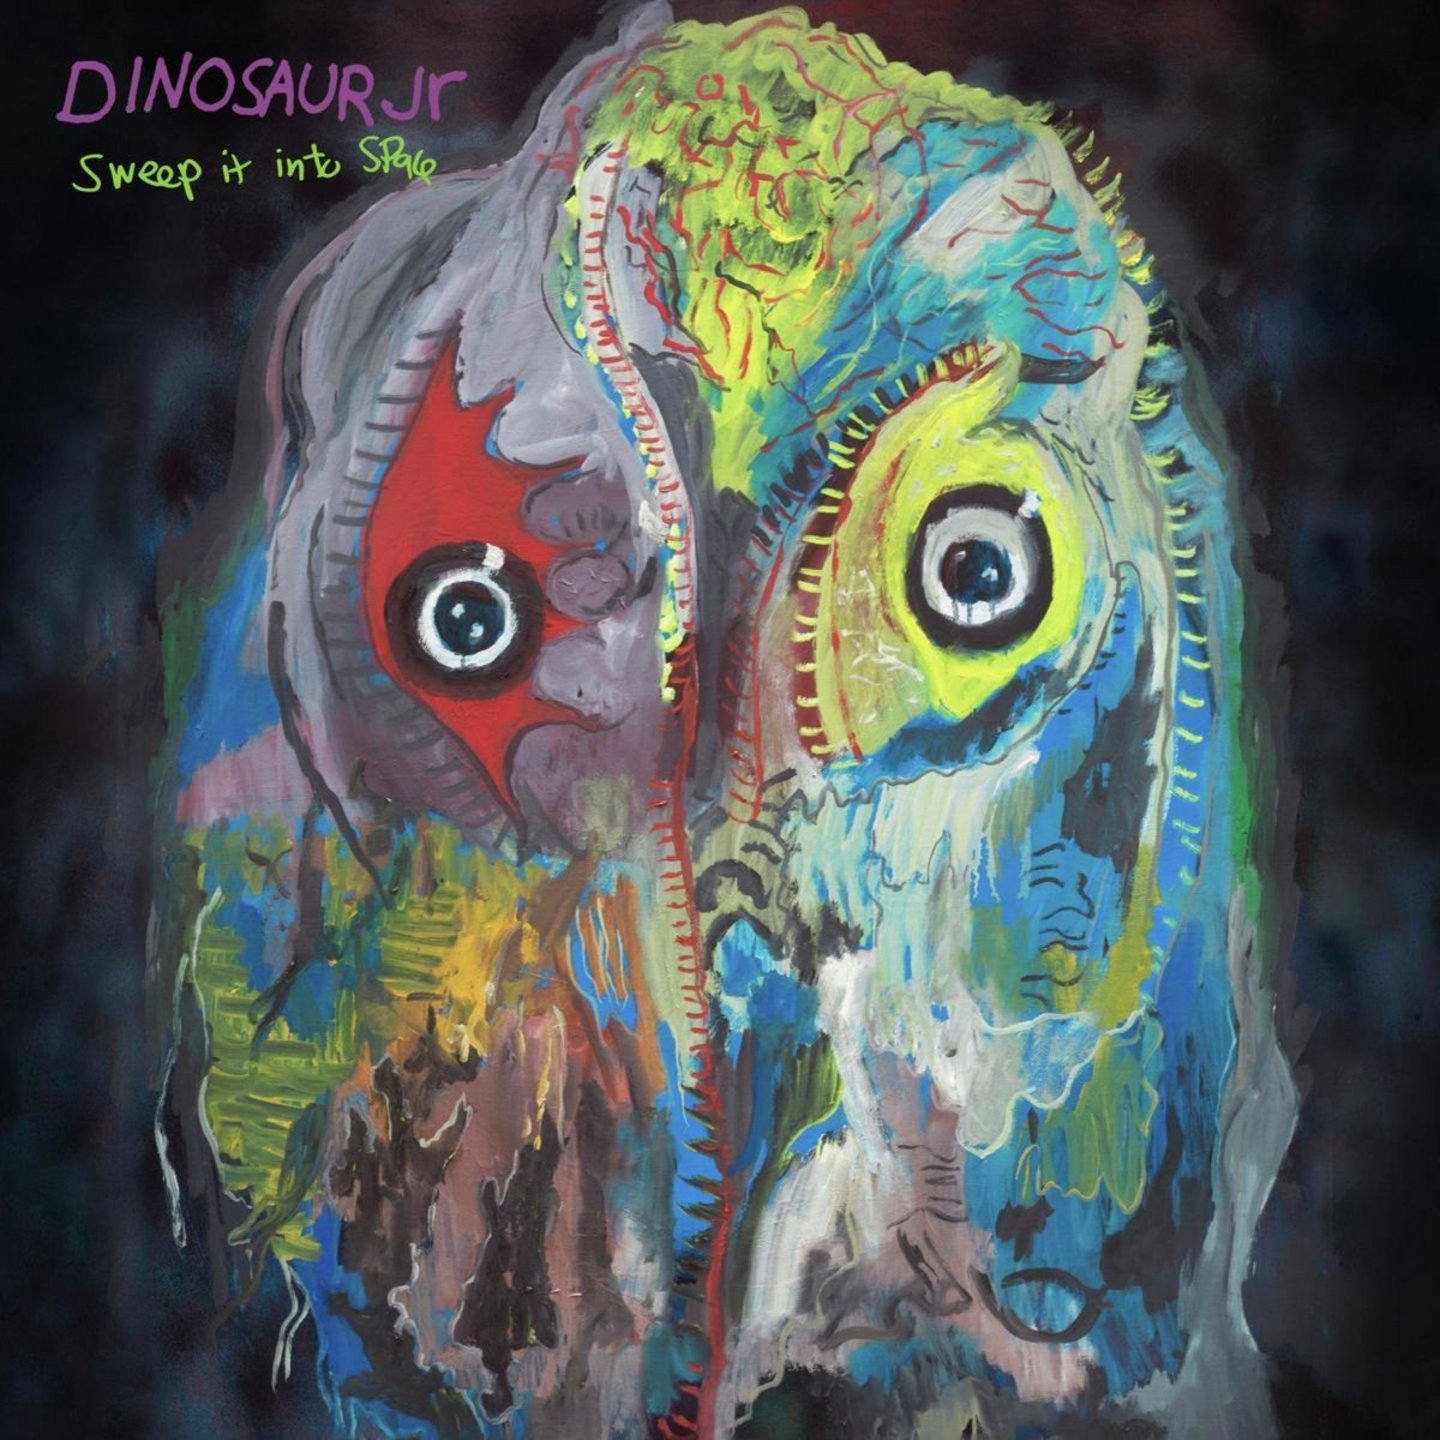 DINOSAUR JR - Sweep It Into Space LP Purple vinyl